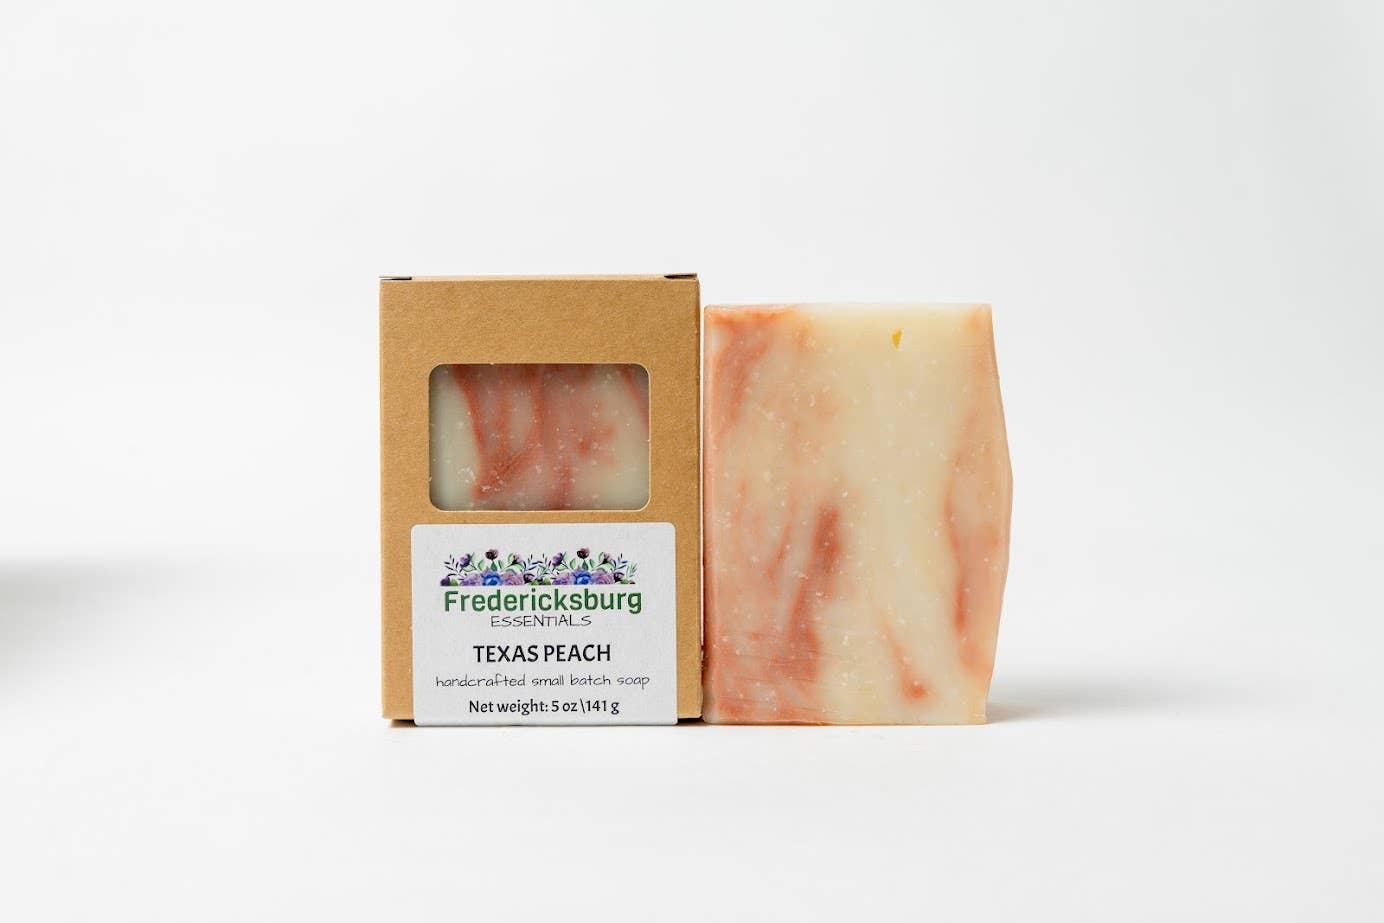 Fredericksburg Essentials - Peach bar soap